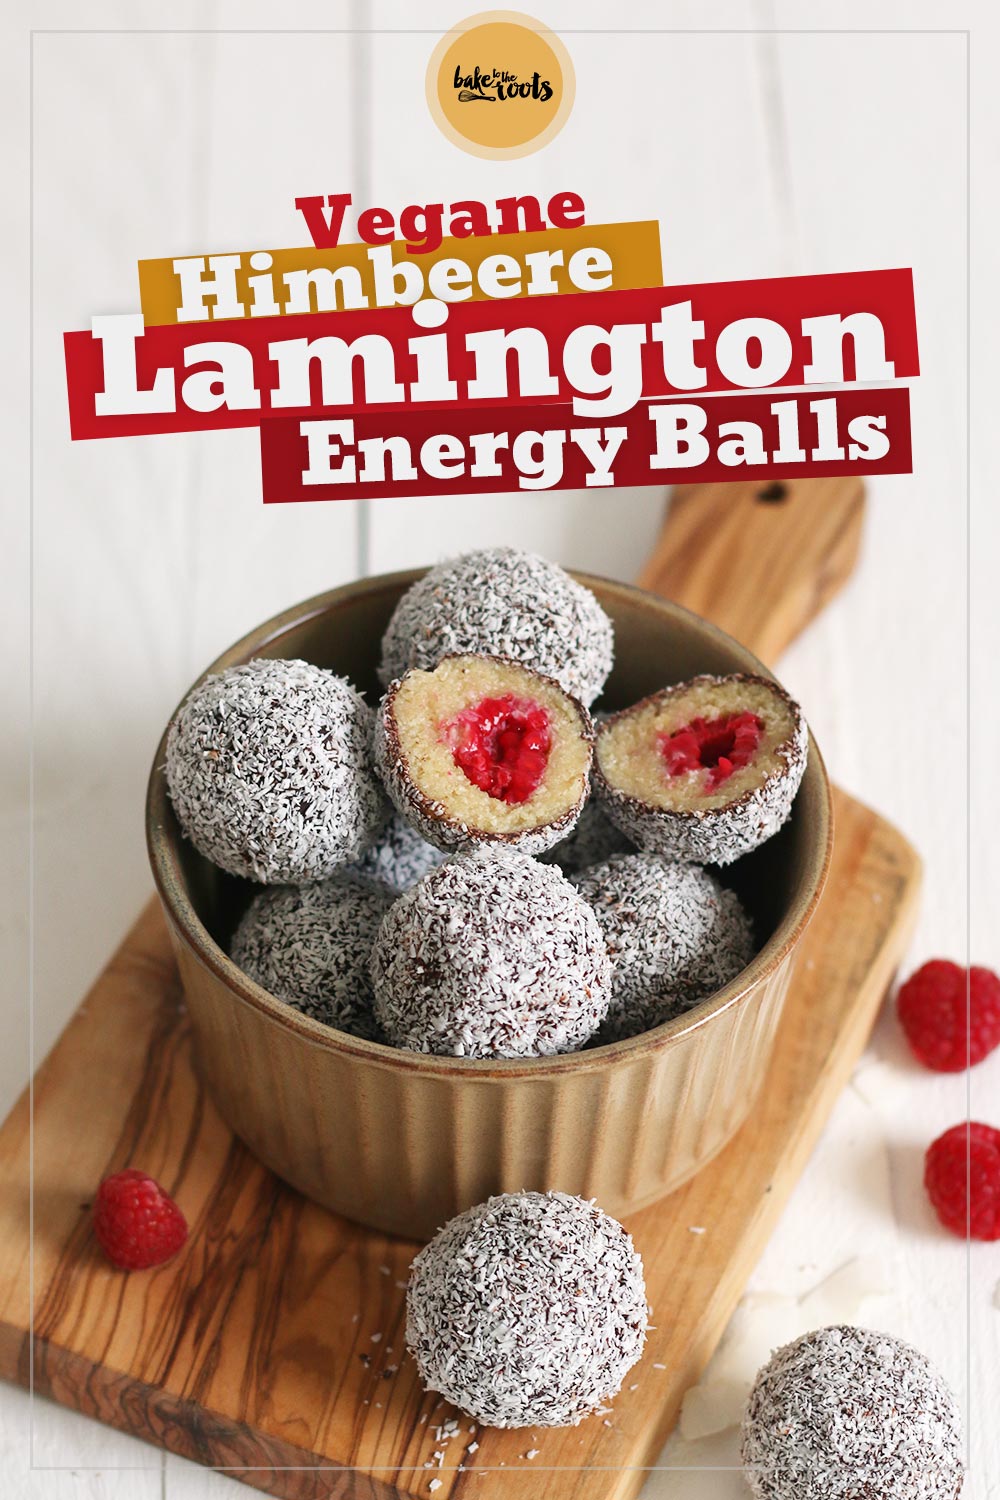 Vegane Himbeere Lamington Energy Balls | Bake to the roots